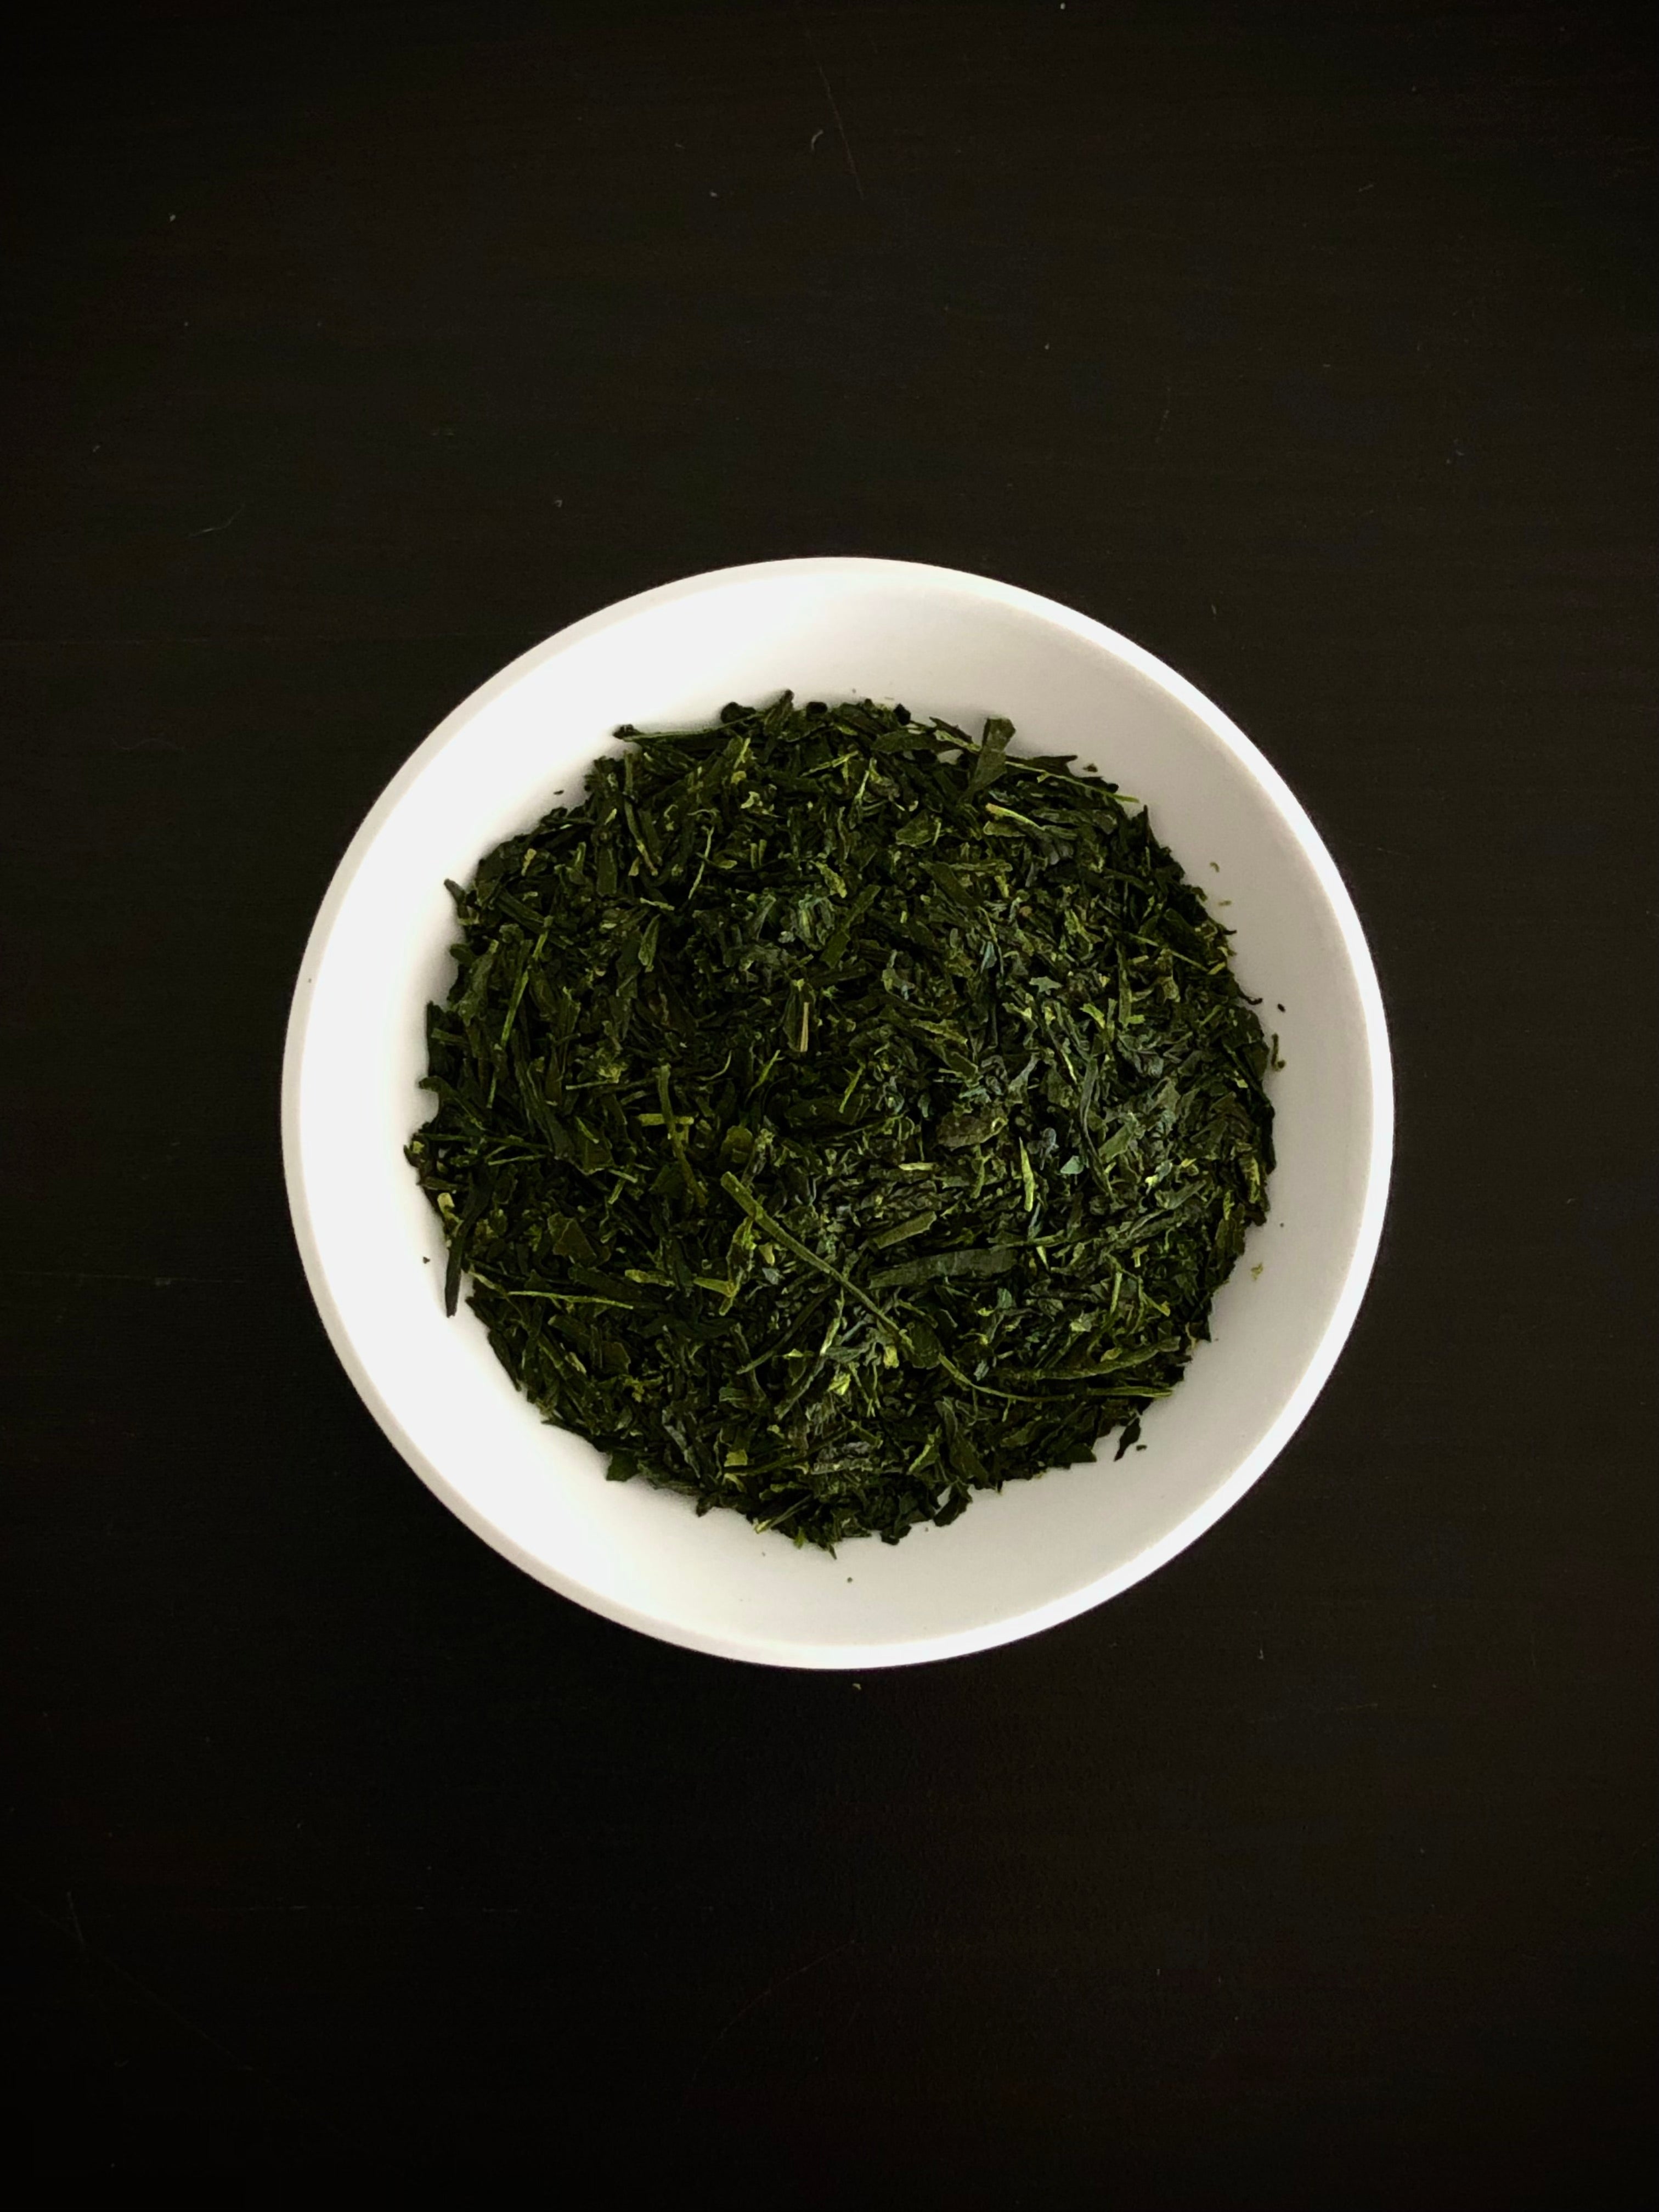 Saemidori sencha green tea loose leaf from Yame Fukuoka sold by Sabo Tea Australia in 30g satchel - Chiyonoen